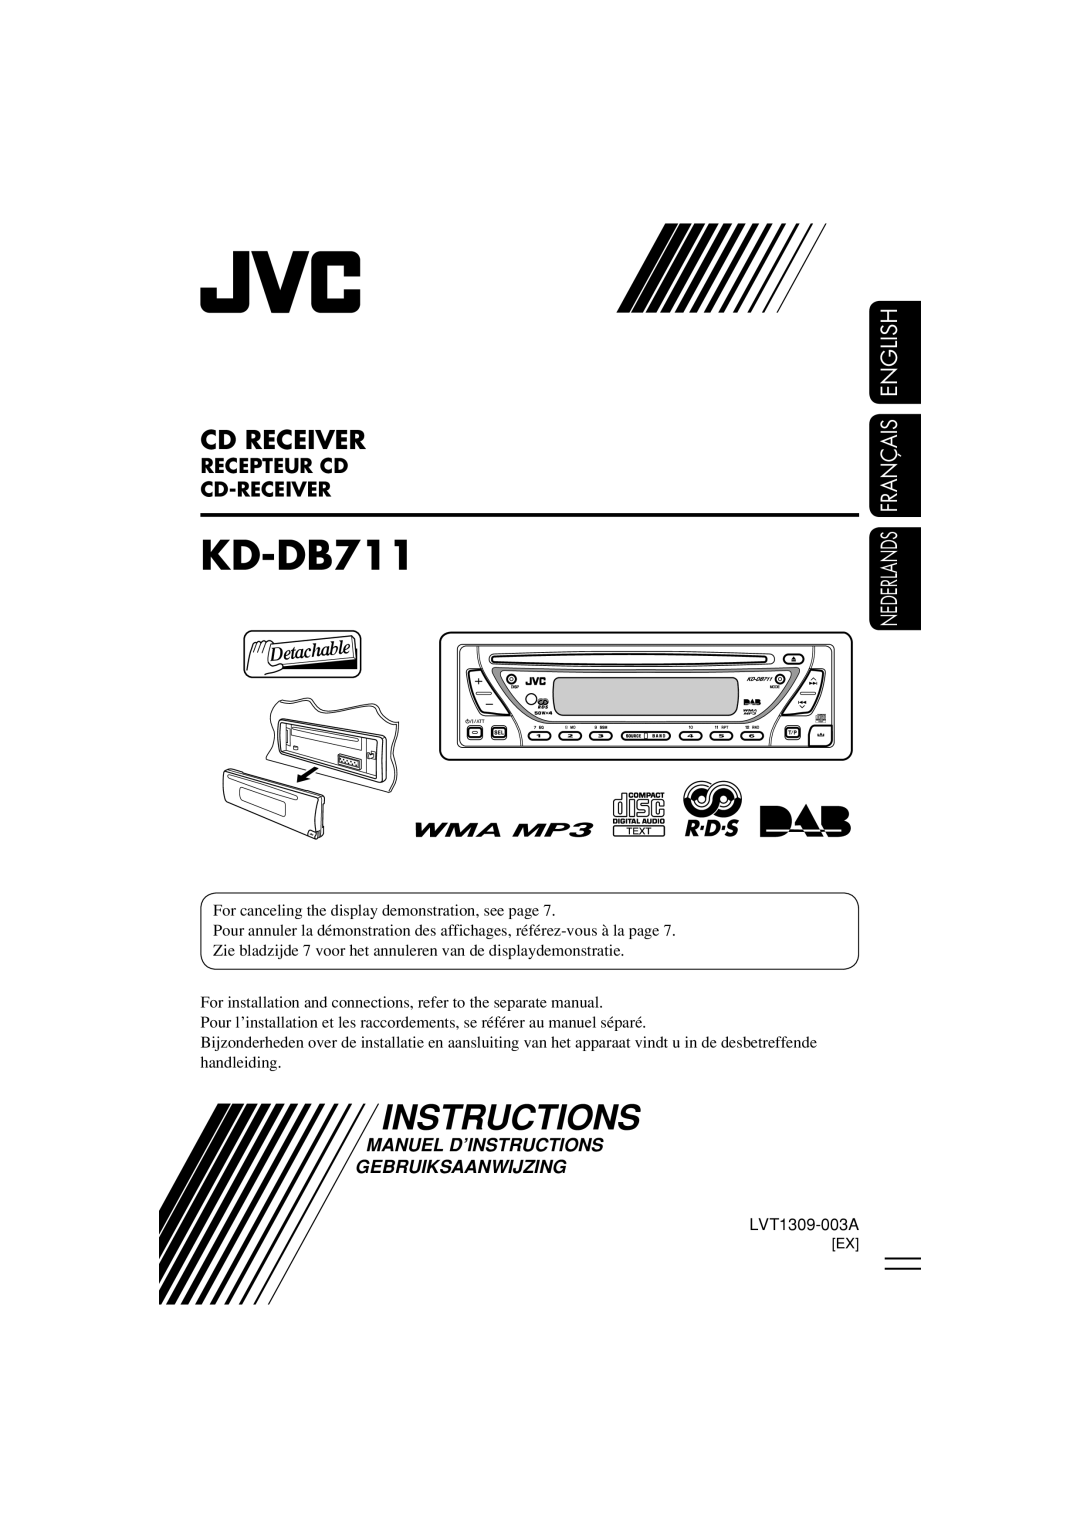 JVC KD-DB711 manual Cd Receiver, Recepteur Cd Cd-Receiver, Manuel D’Instructions Gebruiksaanwijzing 